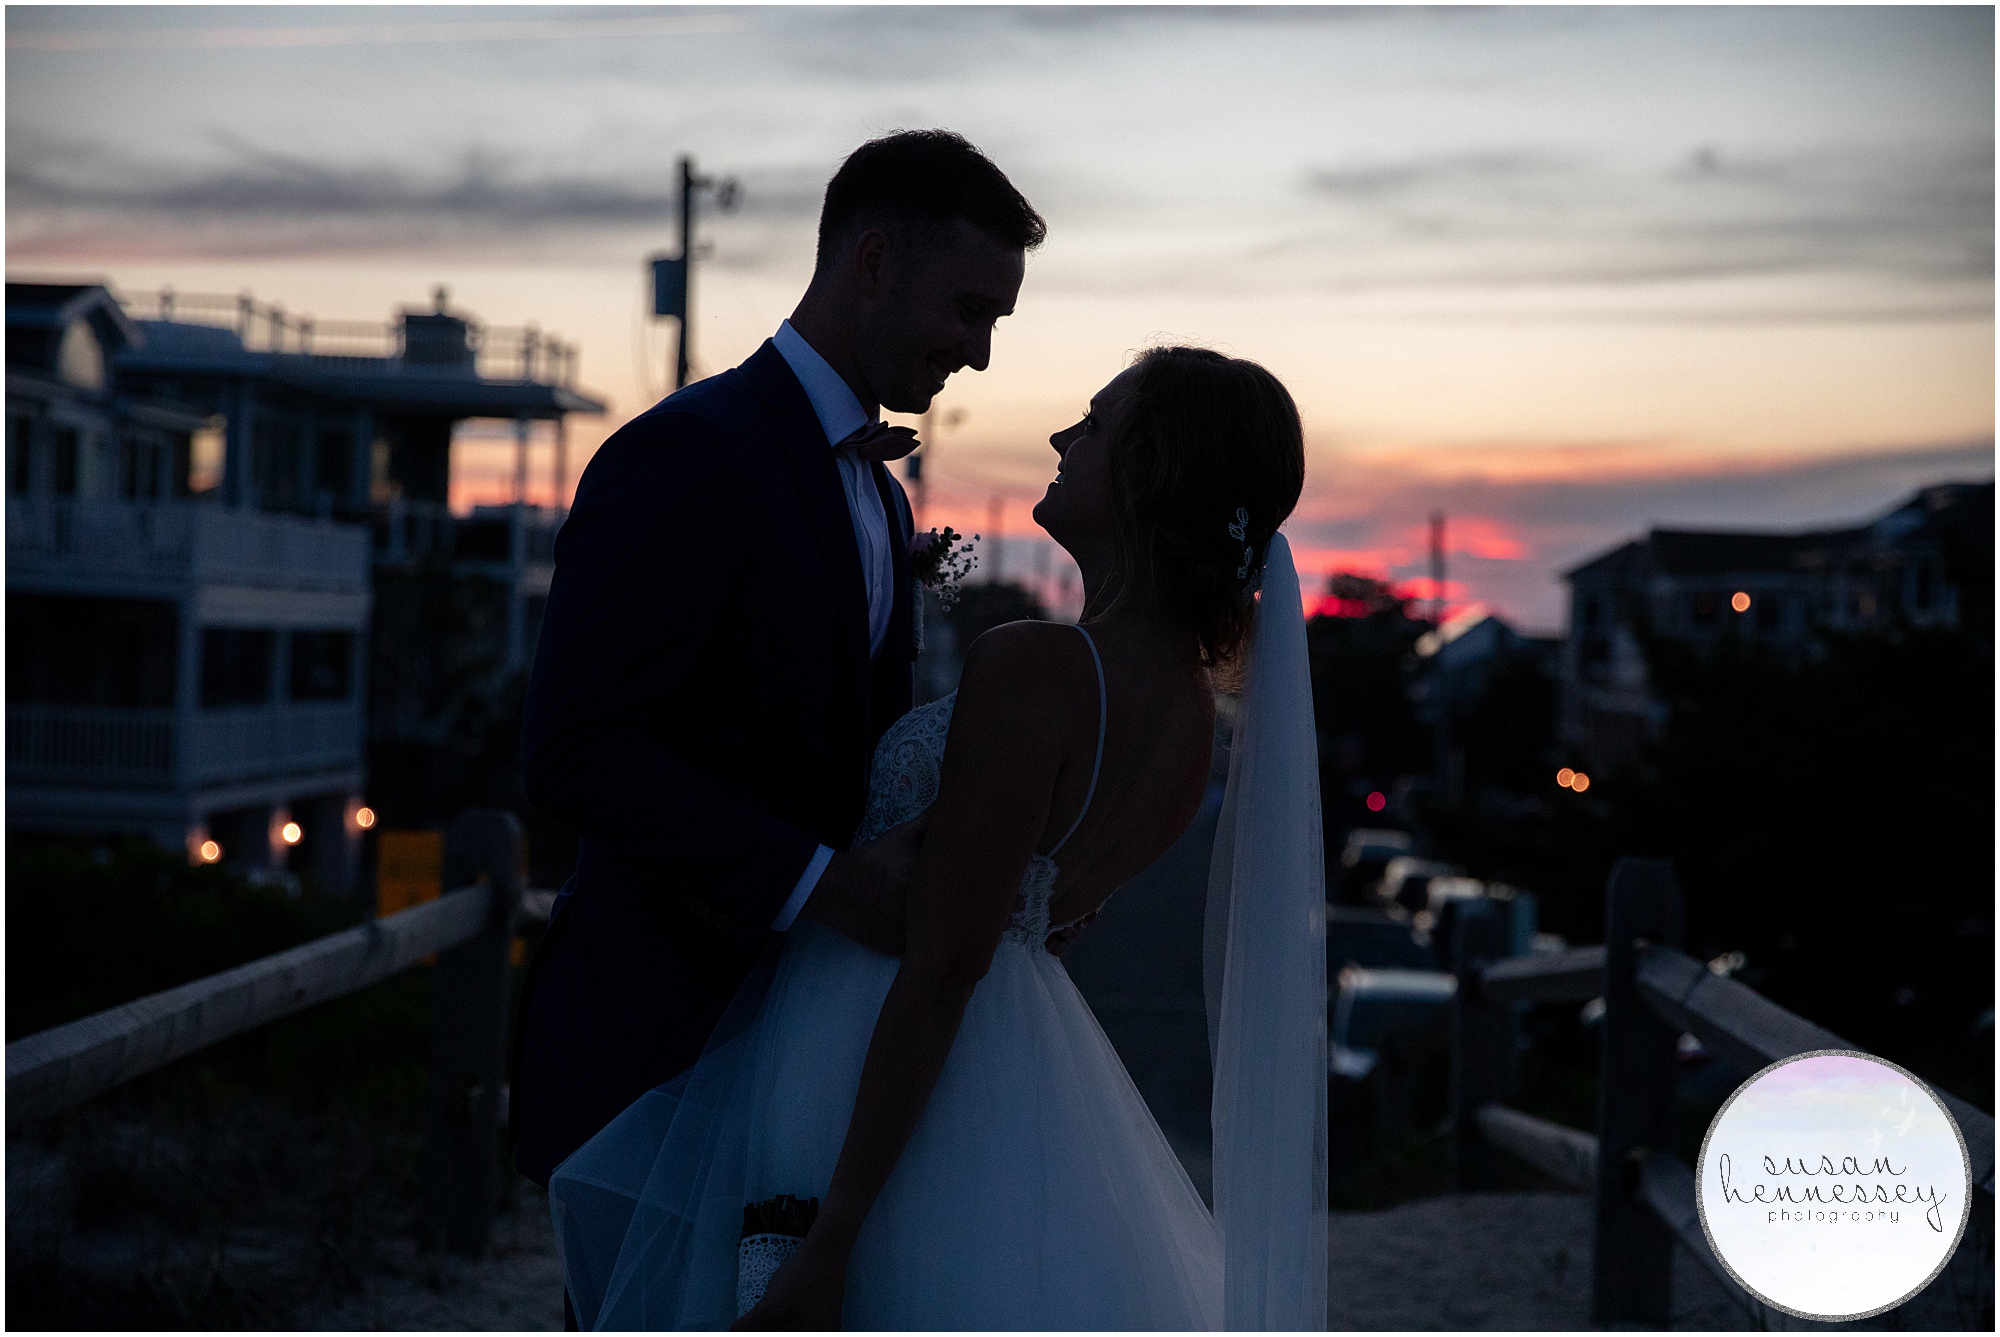 Susan Hennessey Photography Best of 2020 Weddings - LBI Microwedding sunset photos